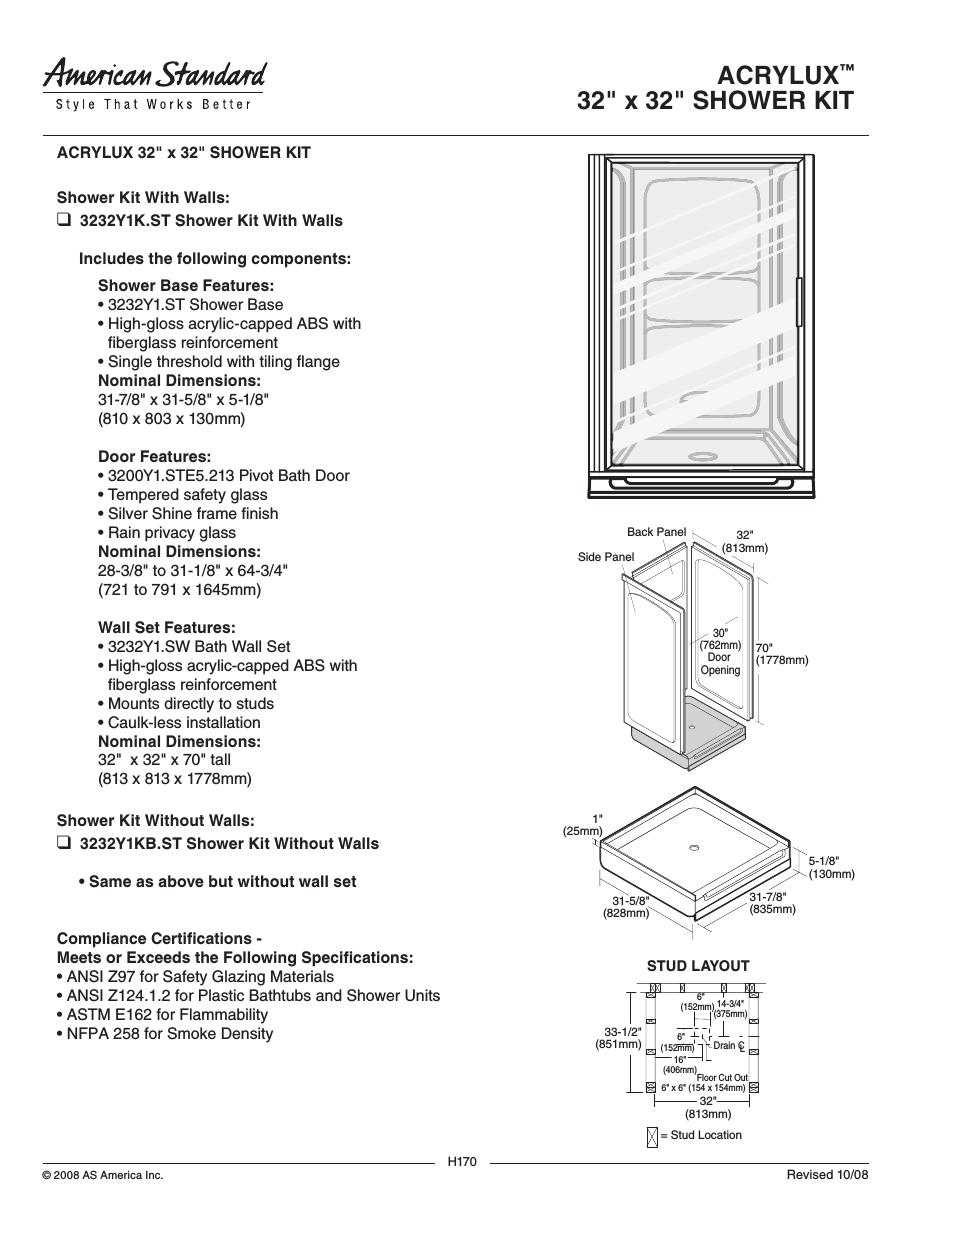 Acrylux Shower Kit 3232Y1K.ST